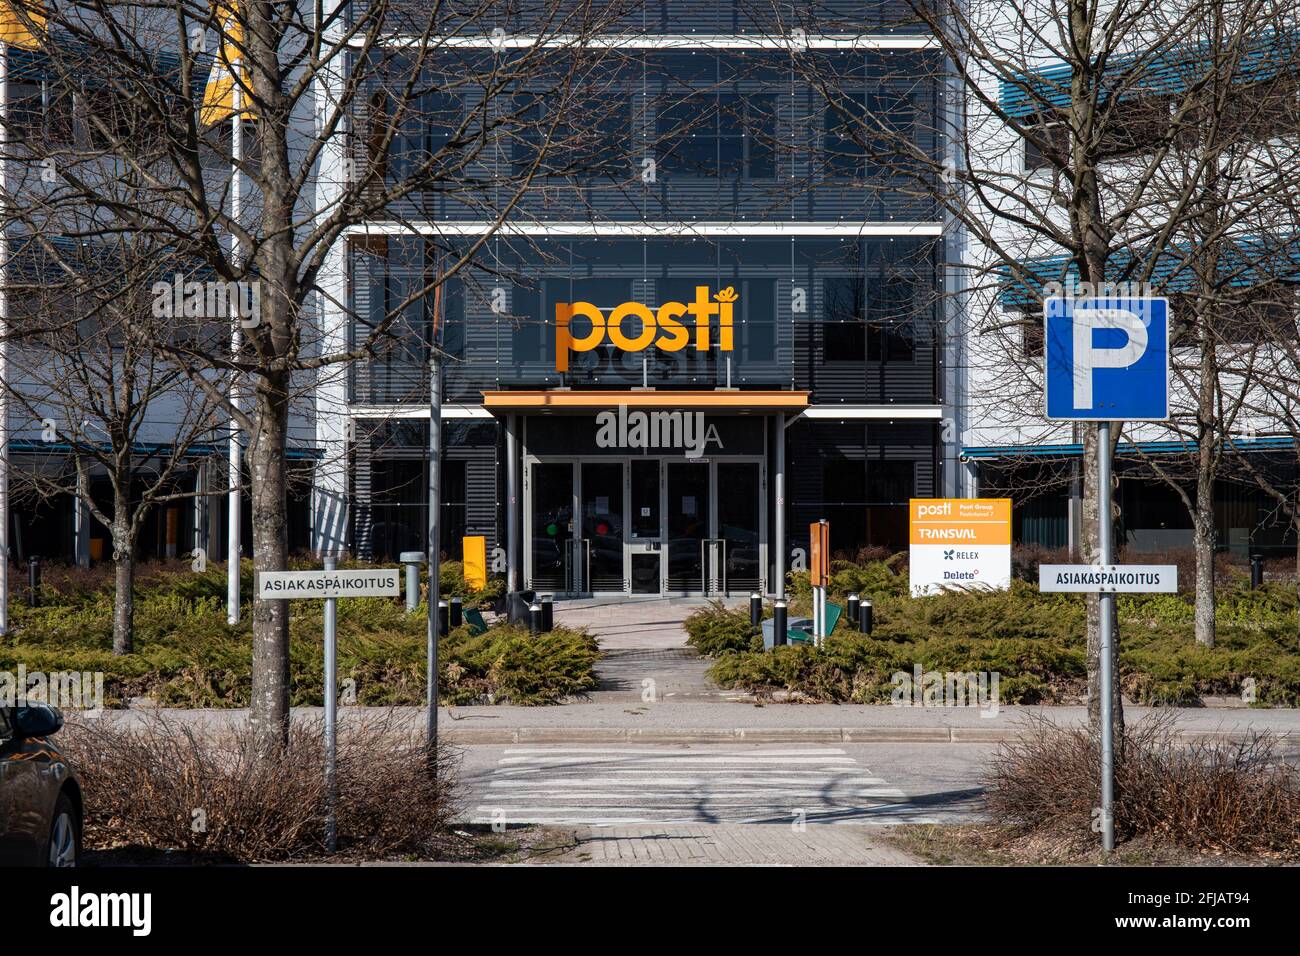 Posti Group Corporation headquarters entrance in Pohjois-Pasila district of Helsinki, Finland Stock Photo